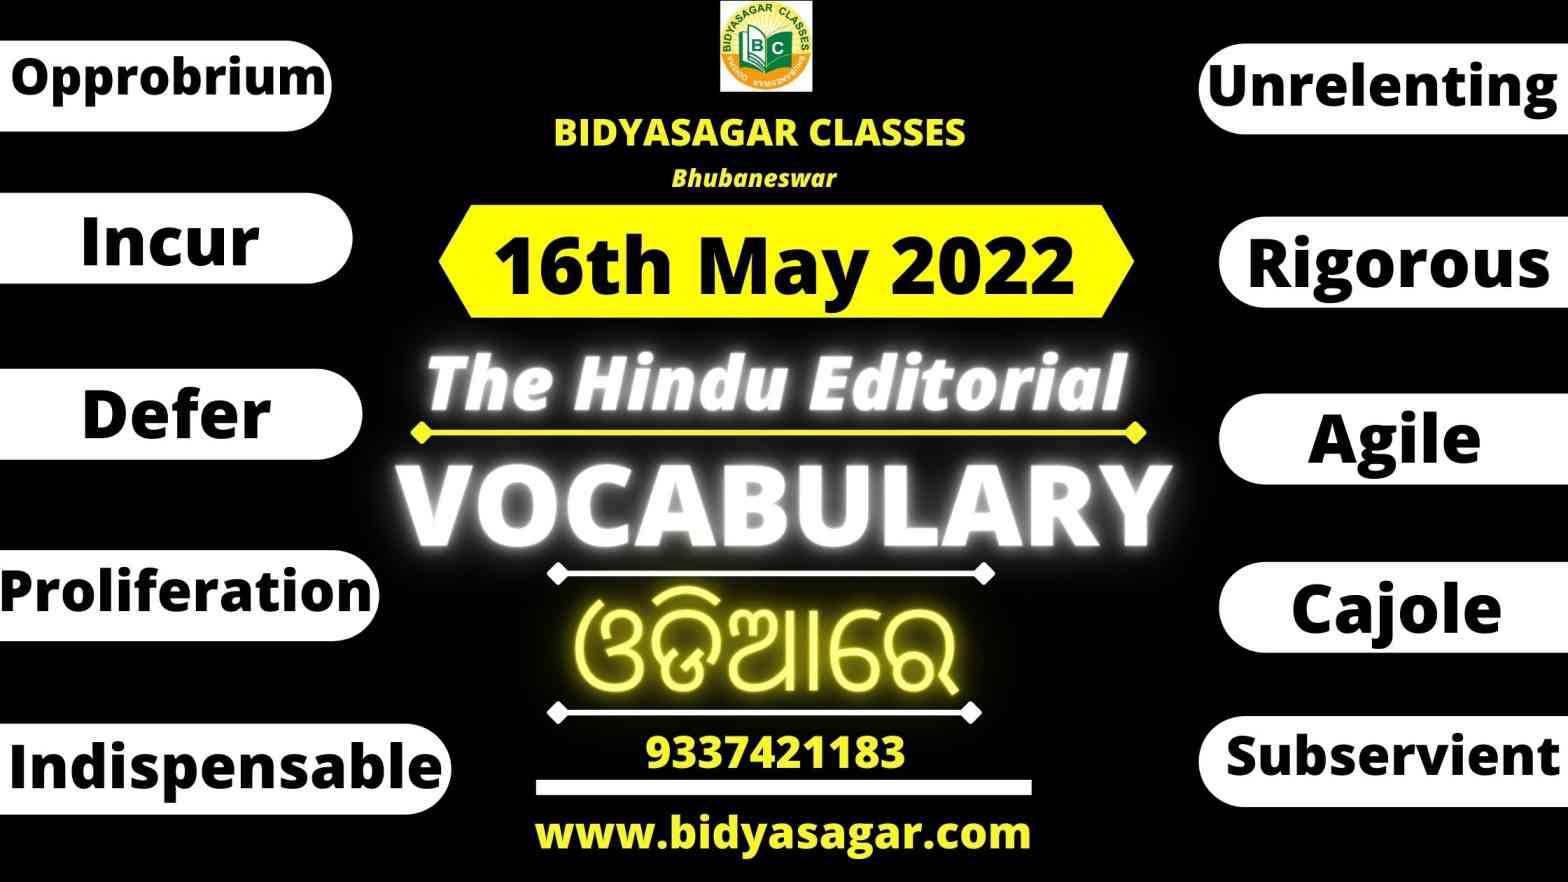 The Hindu Editorial Vocabulary of 16th May 2022